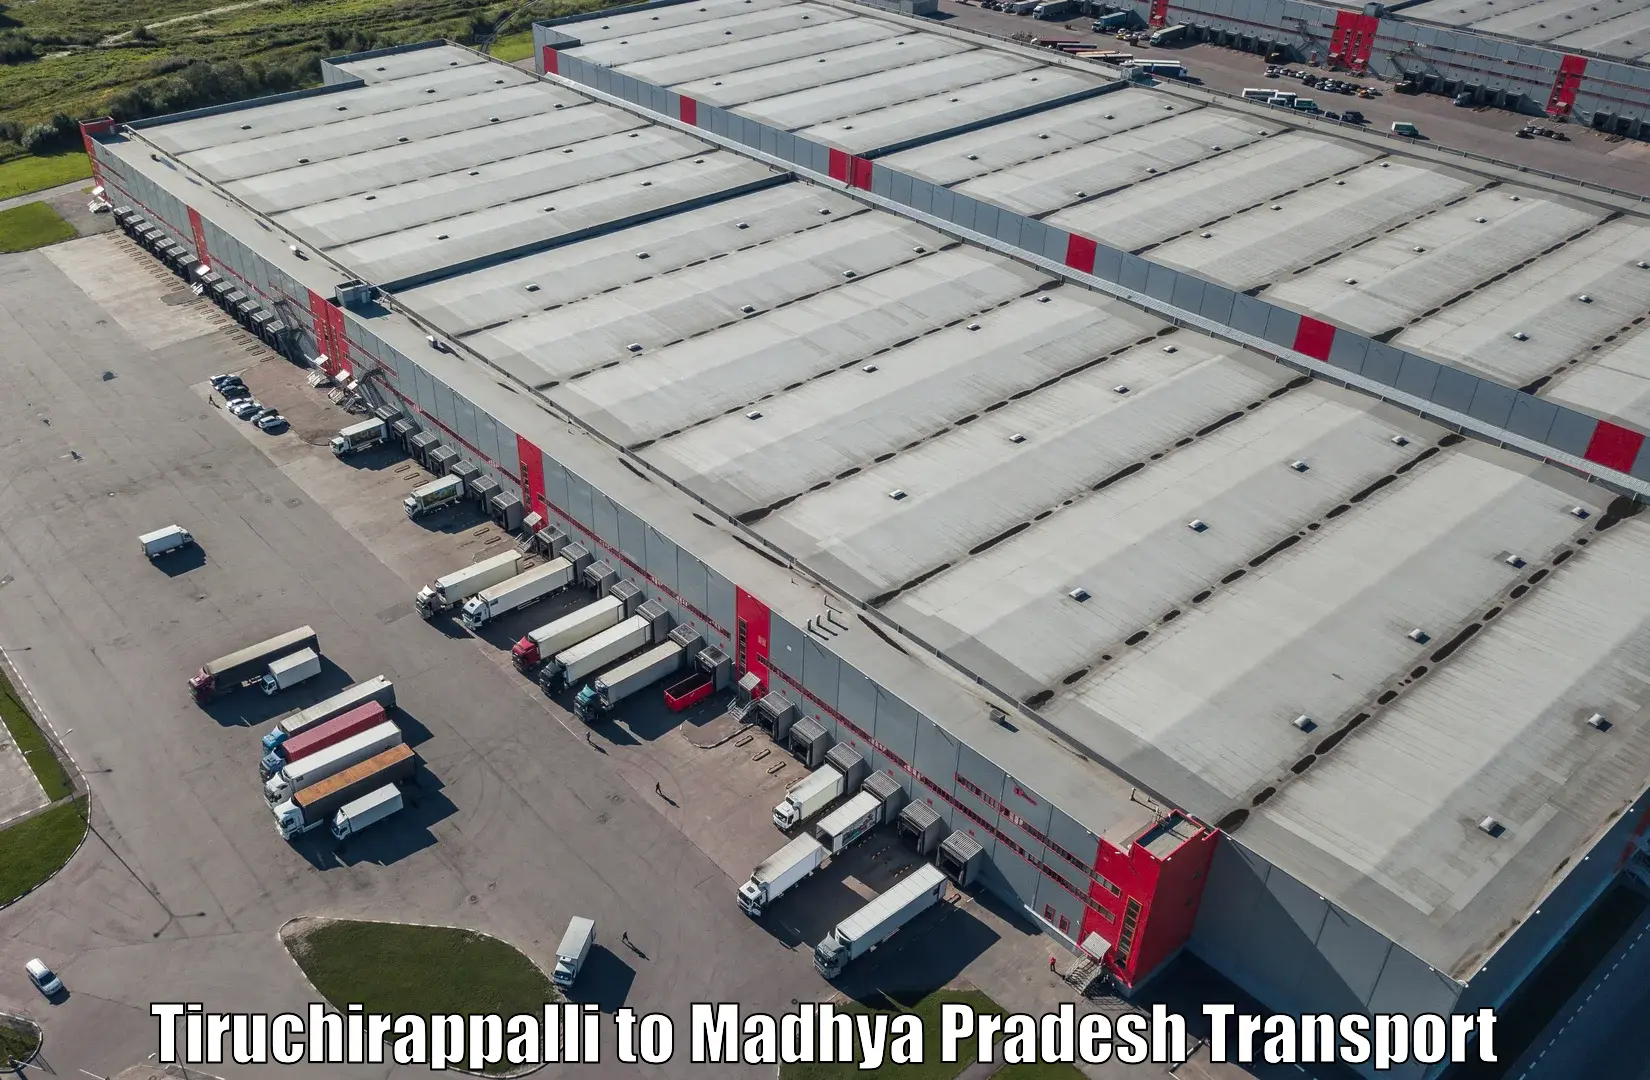 Truck transport companies in India Tiruchirappalli to Silwani